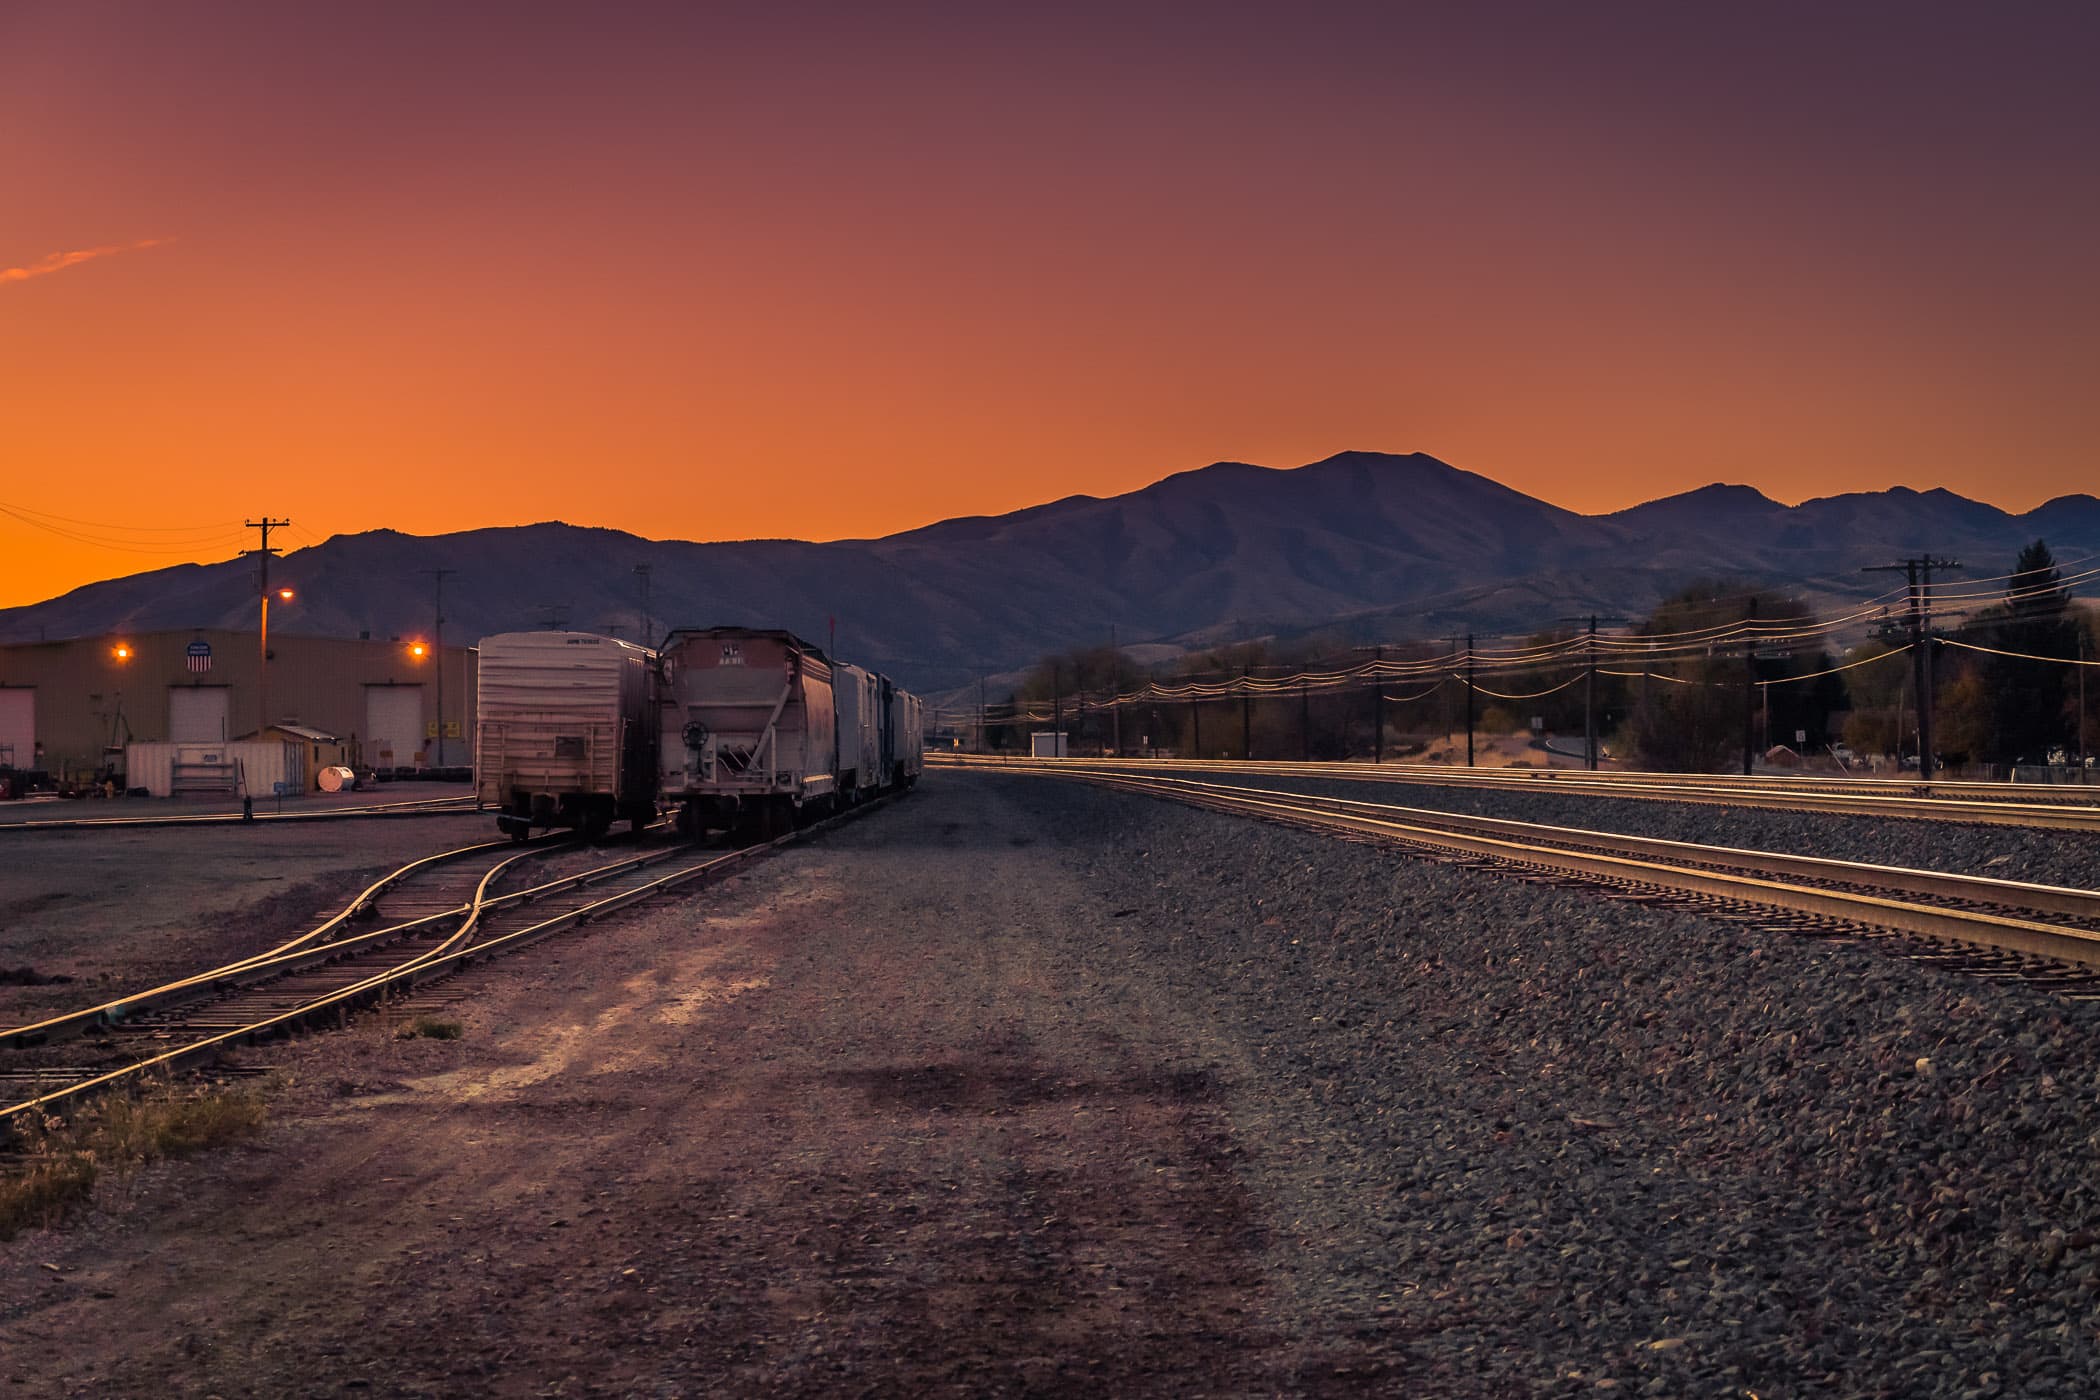 The sun rises beyond the mountains near a rail yard on the outskirts of Pocatello, Idaho.